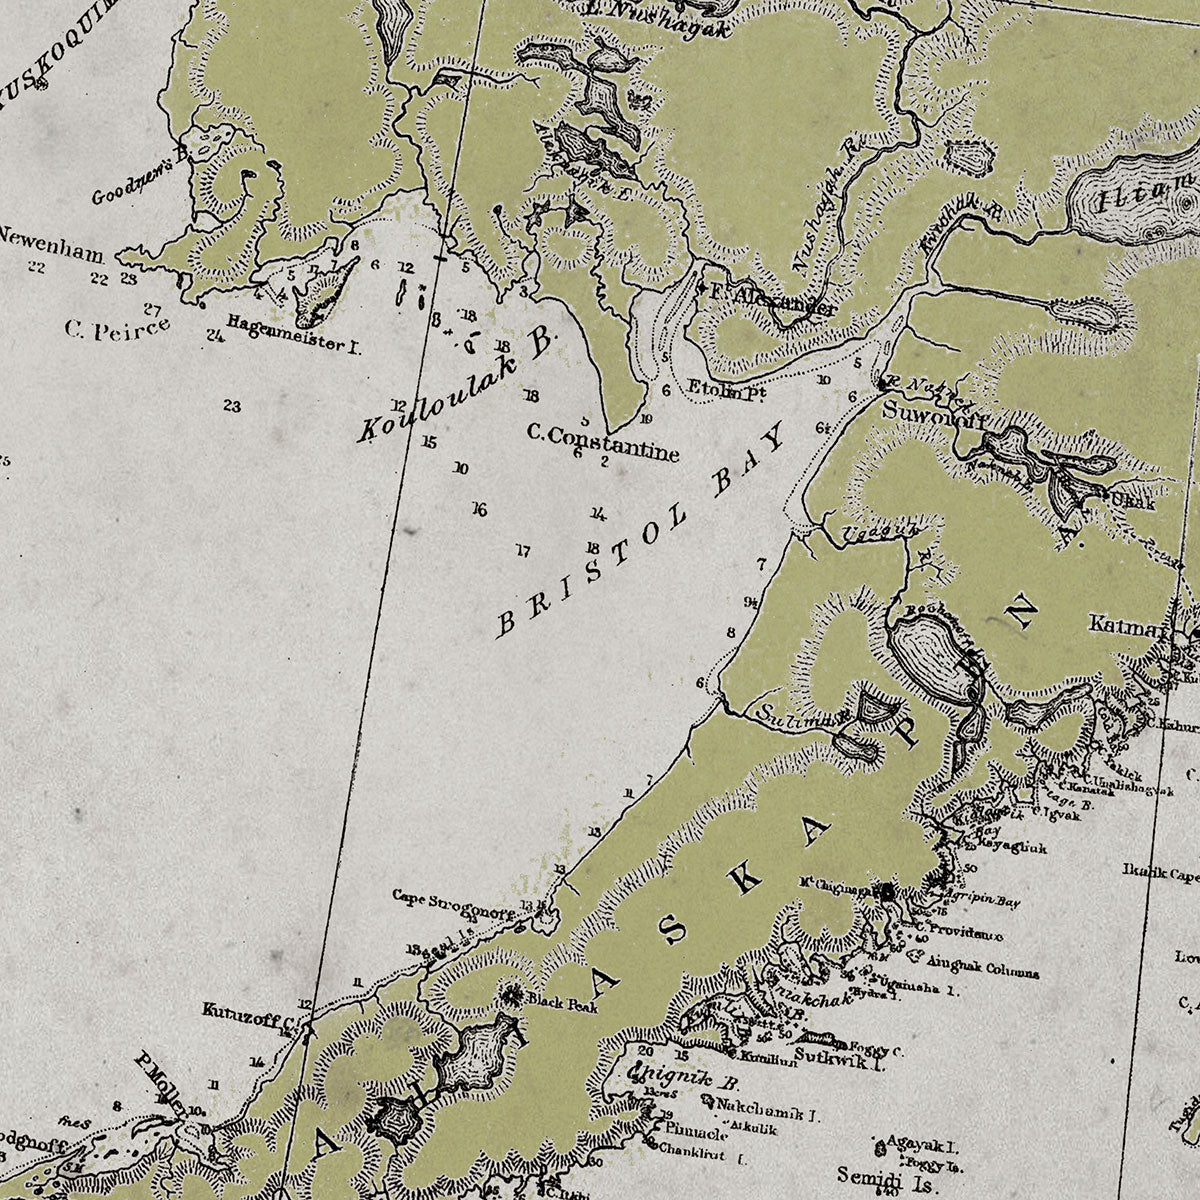 Alaska Nautical Map Circa Early 20th C.